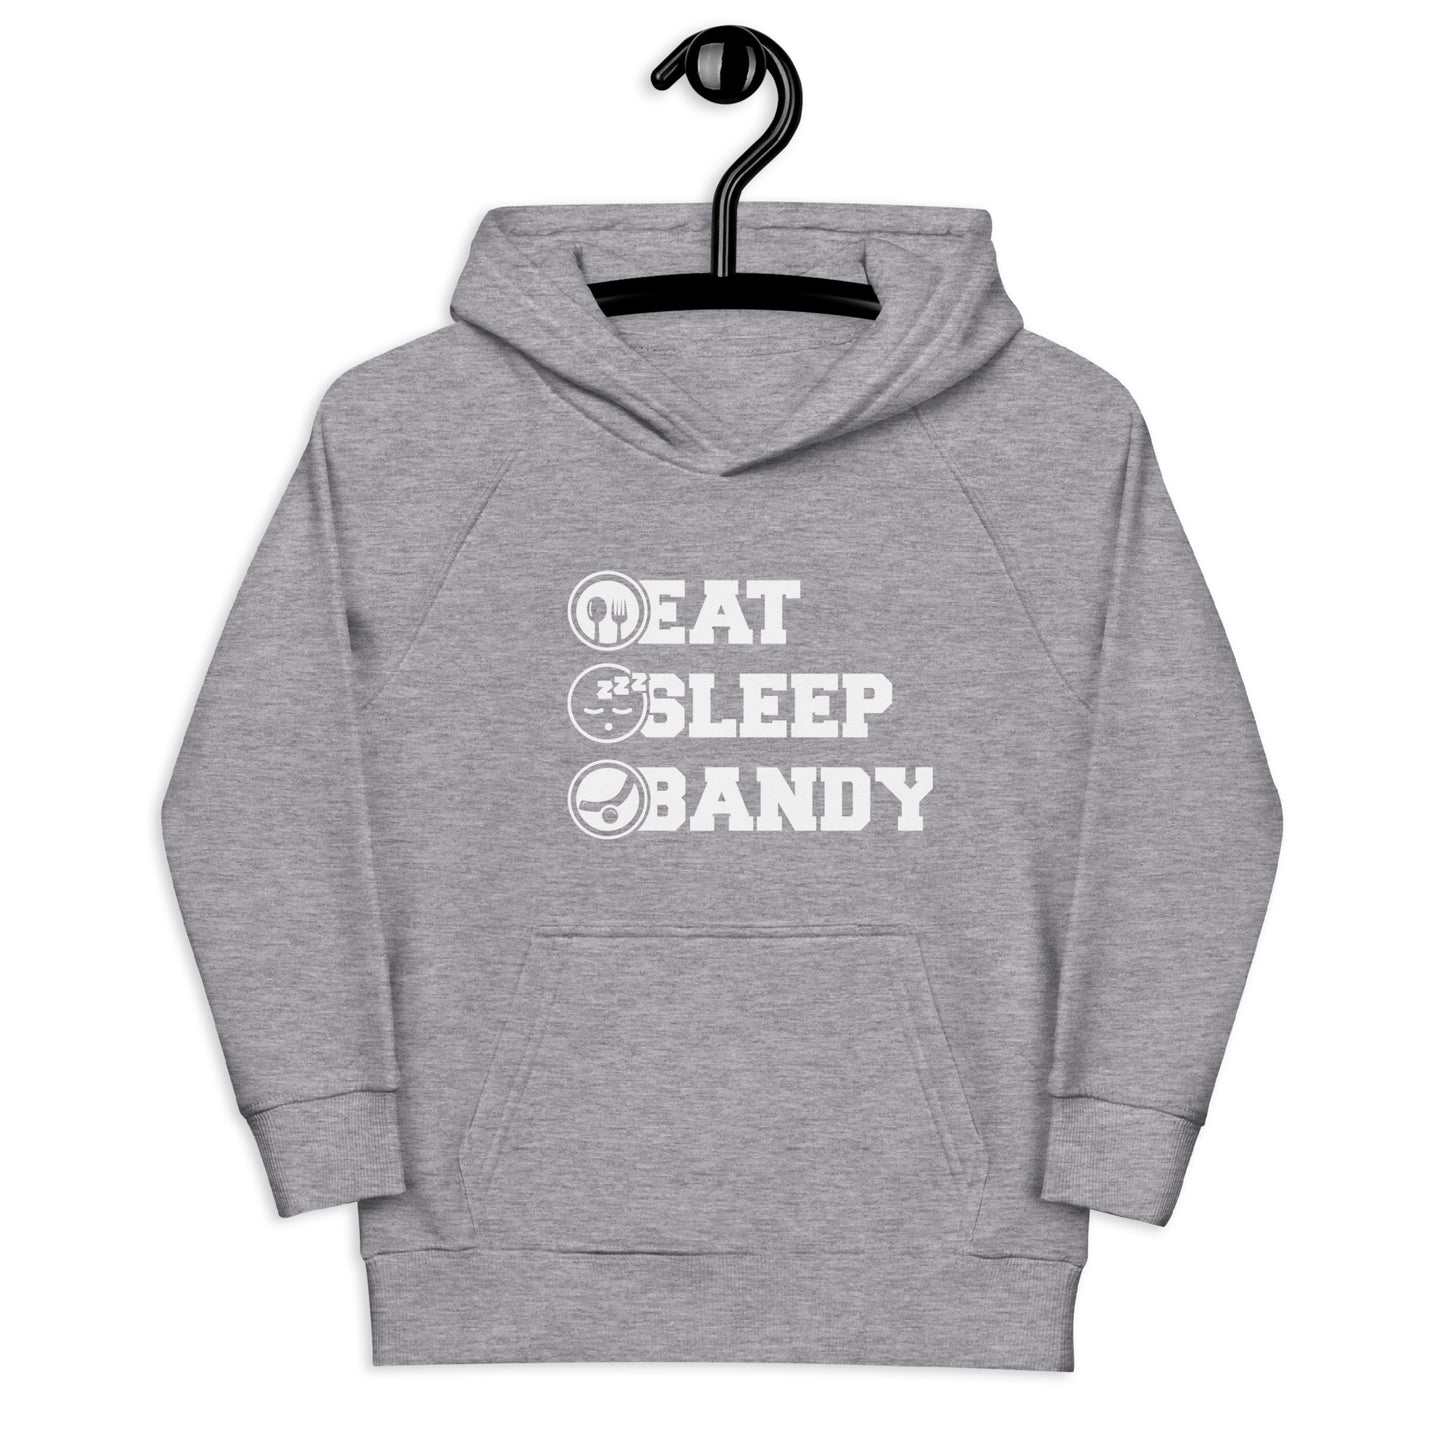 Hoodie - Eat Sleep Bandy